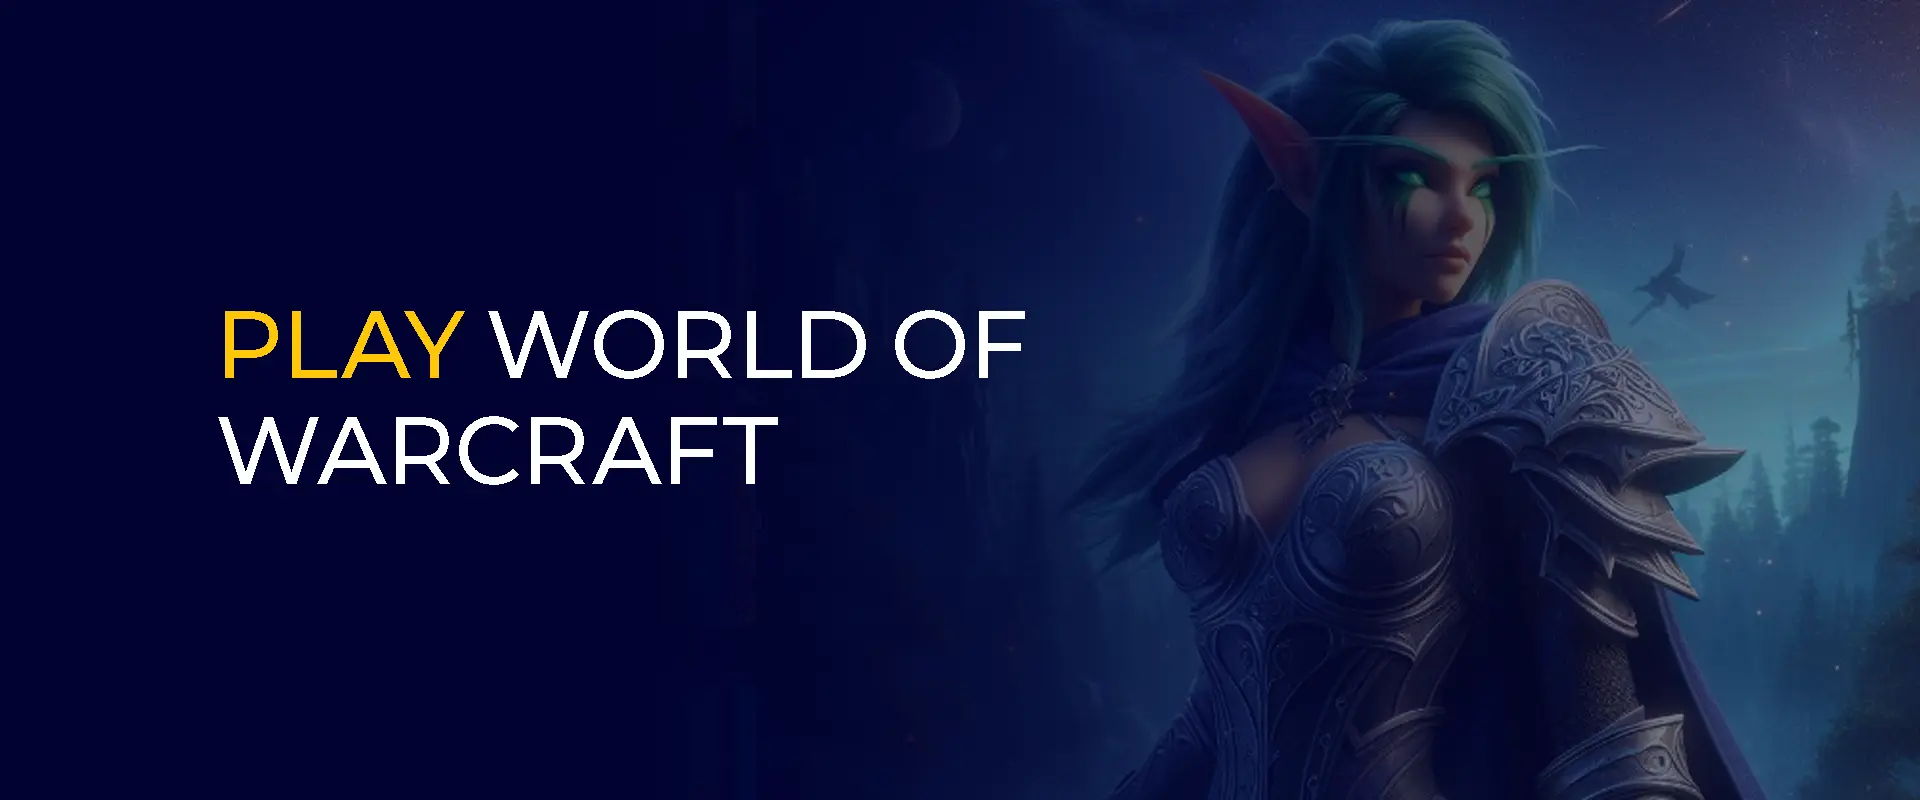 Play World of Warcraft 